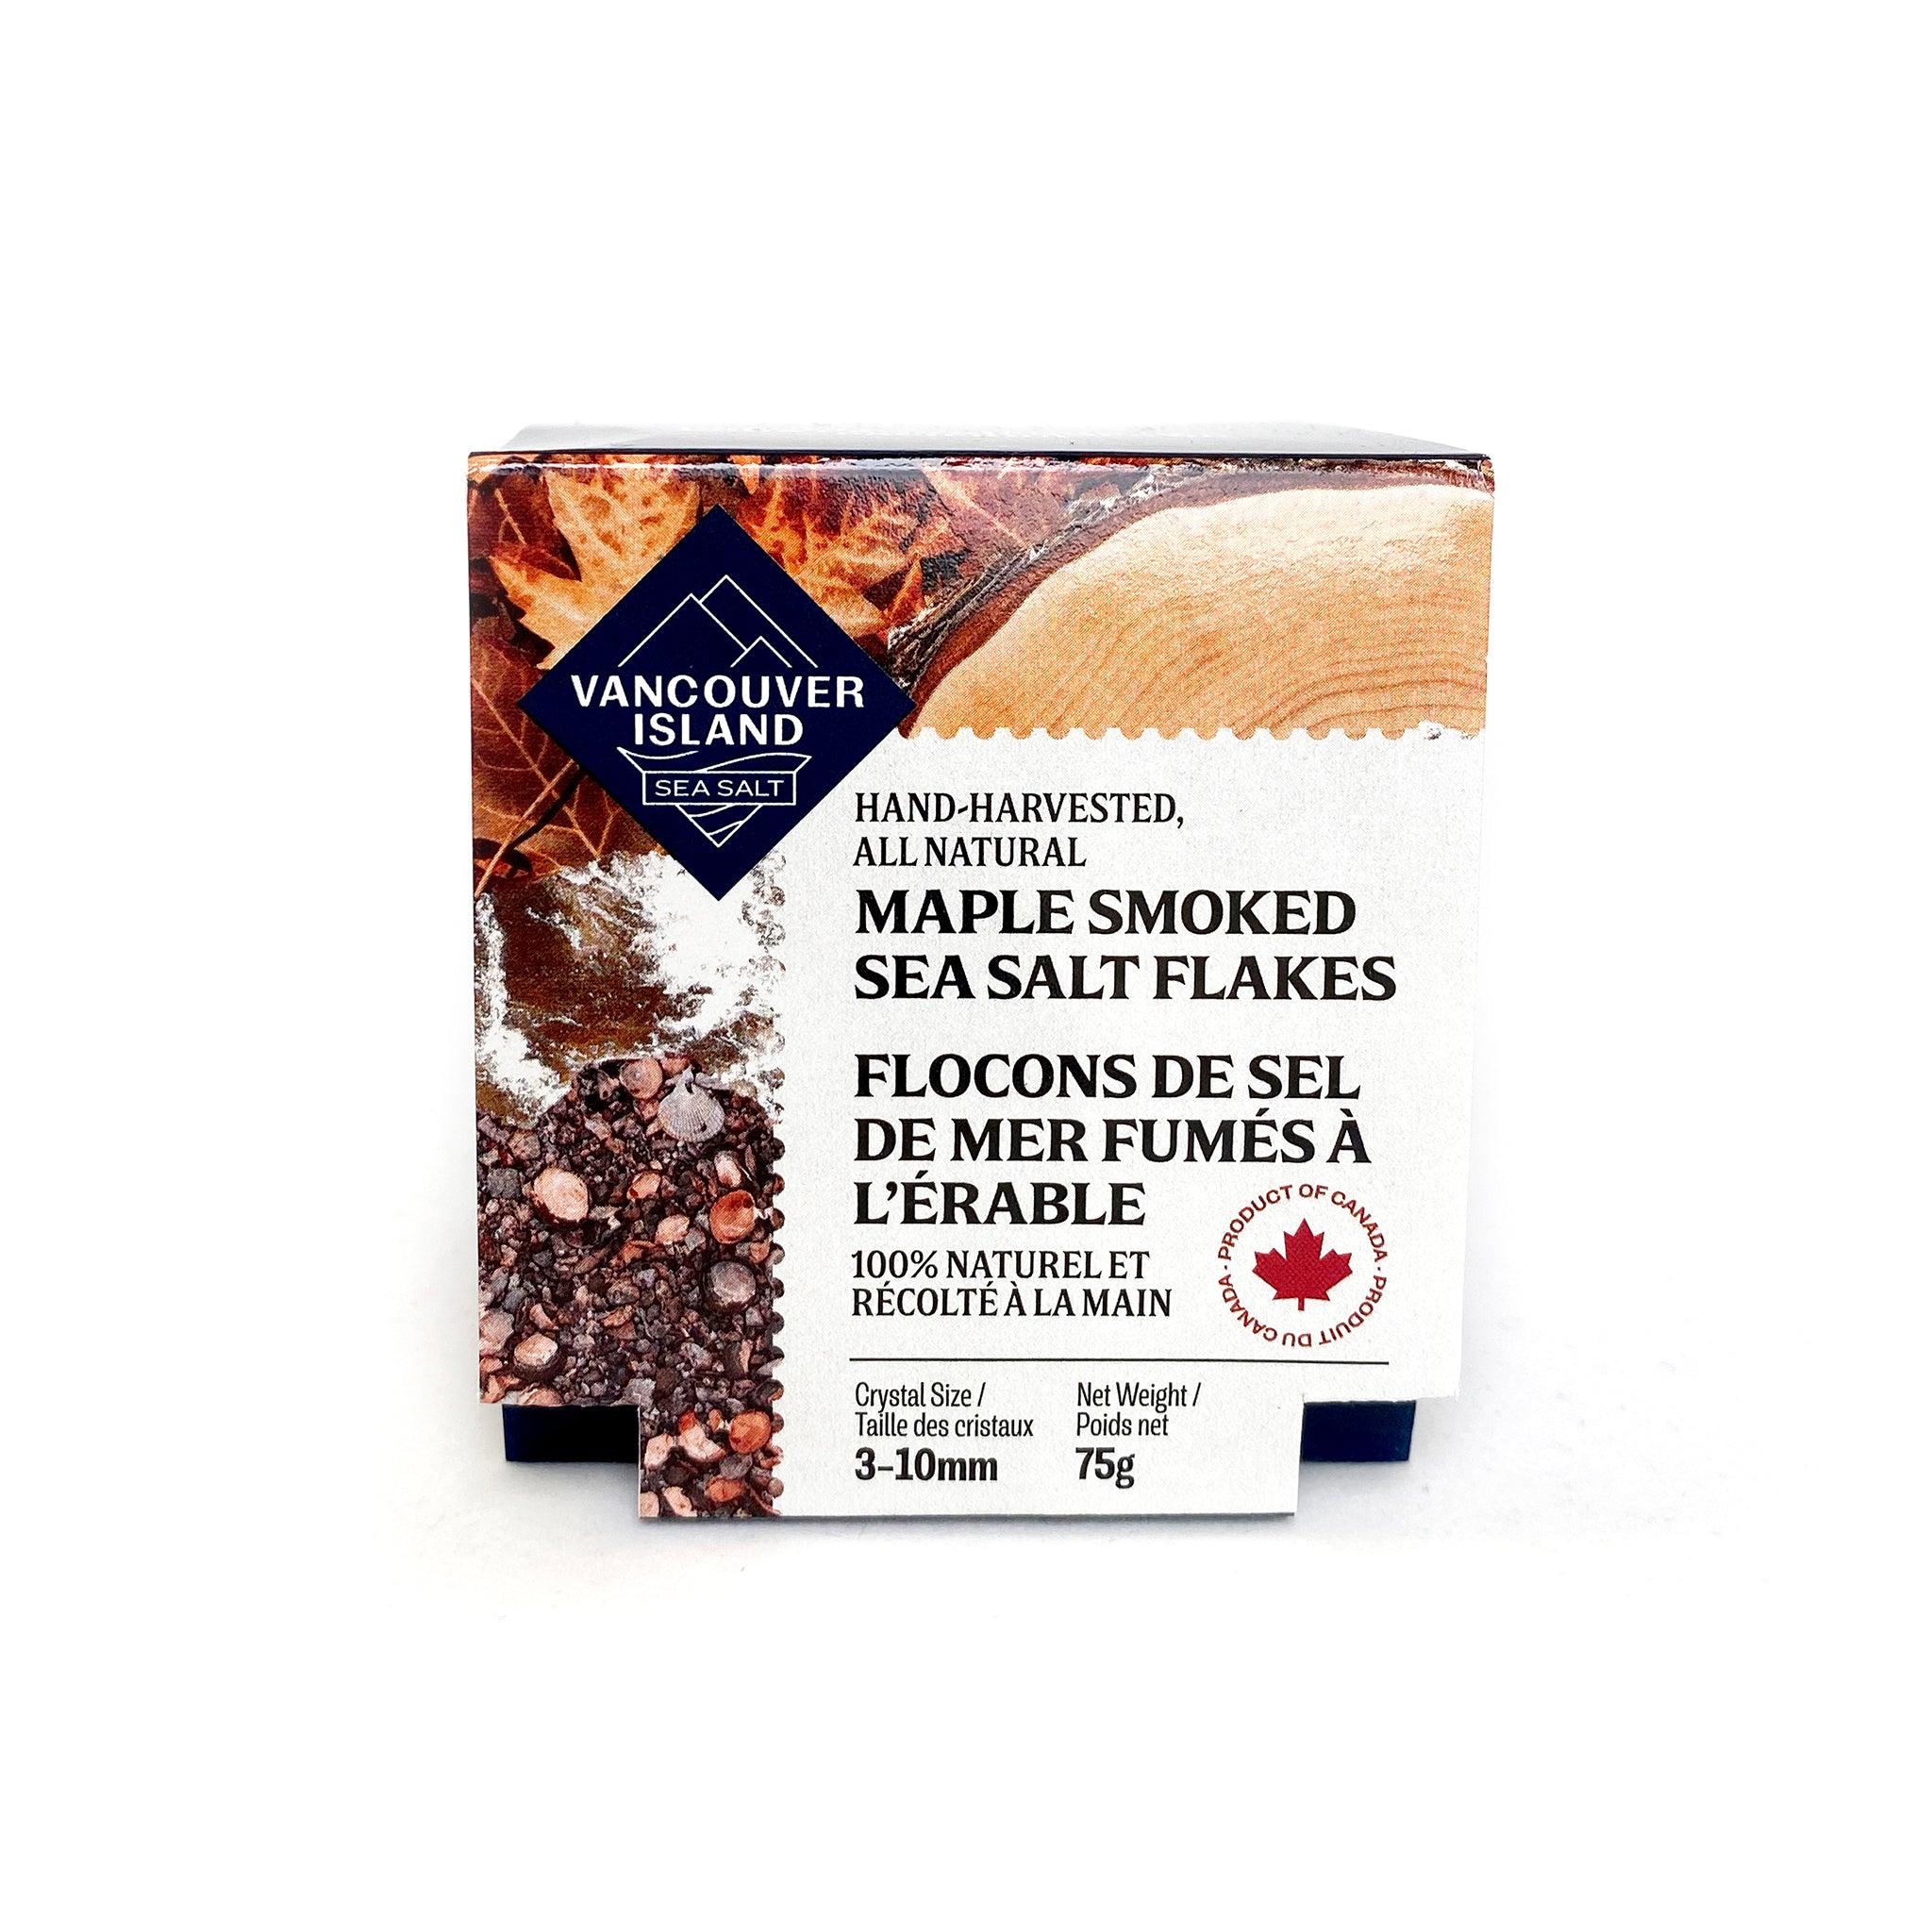 Vancouver Island Salt Co. Hand-harvested, all natural Maple Smoked Sea Salt Flakes.